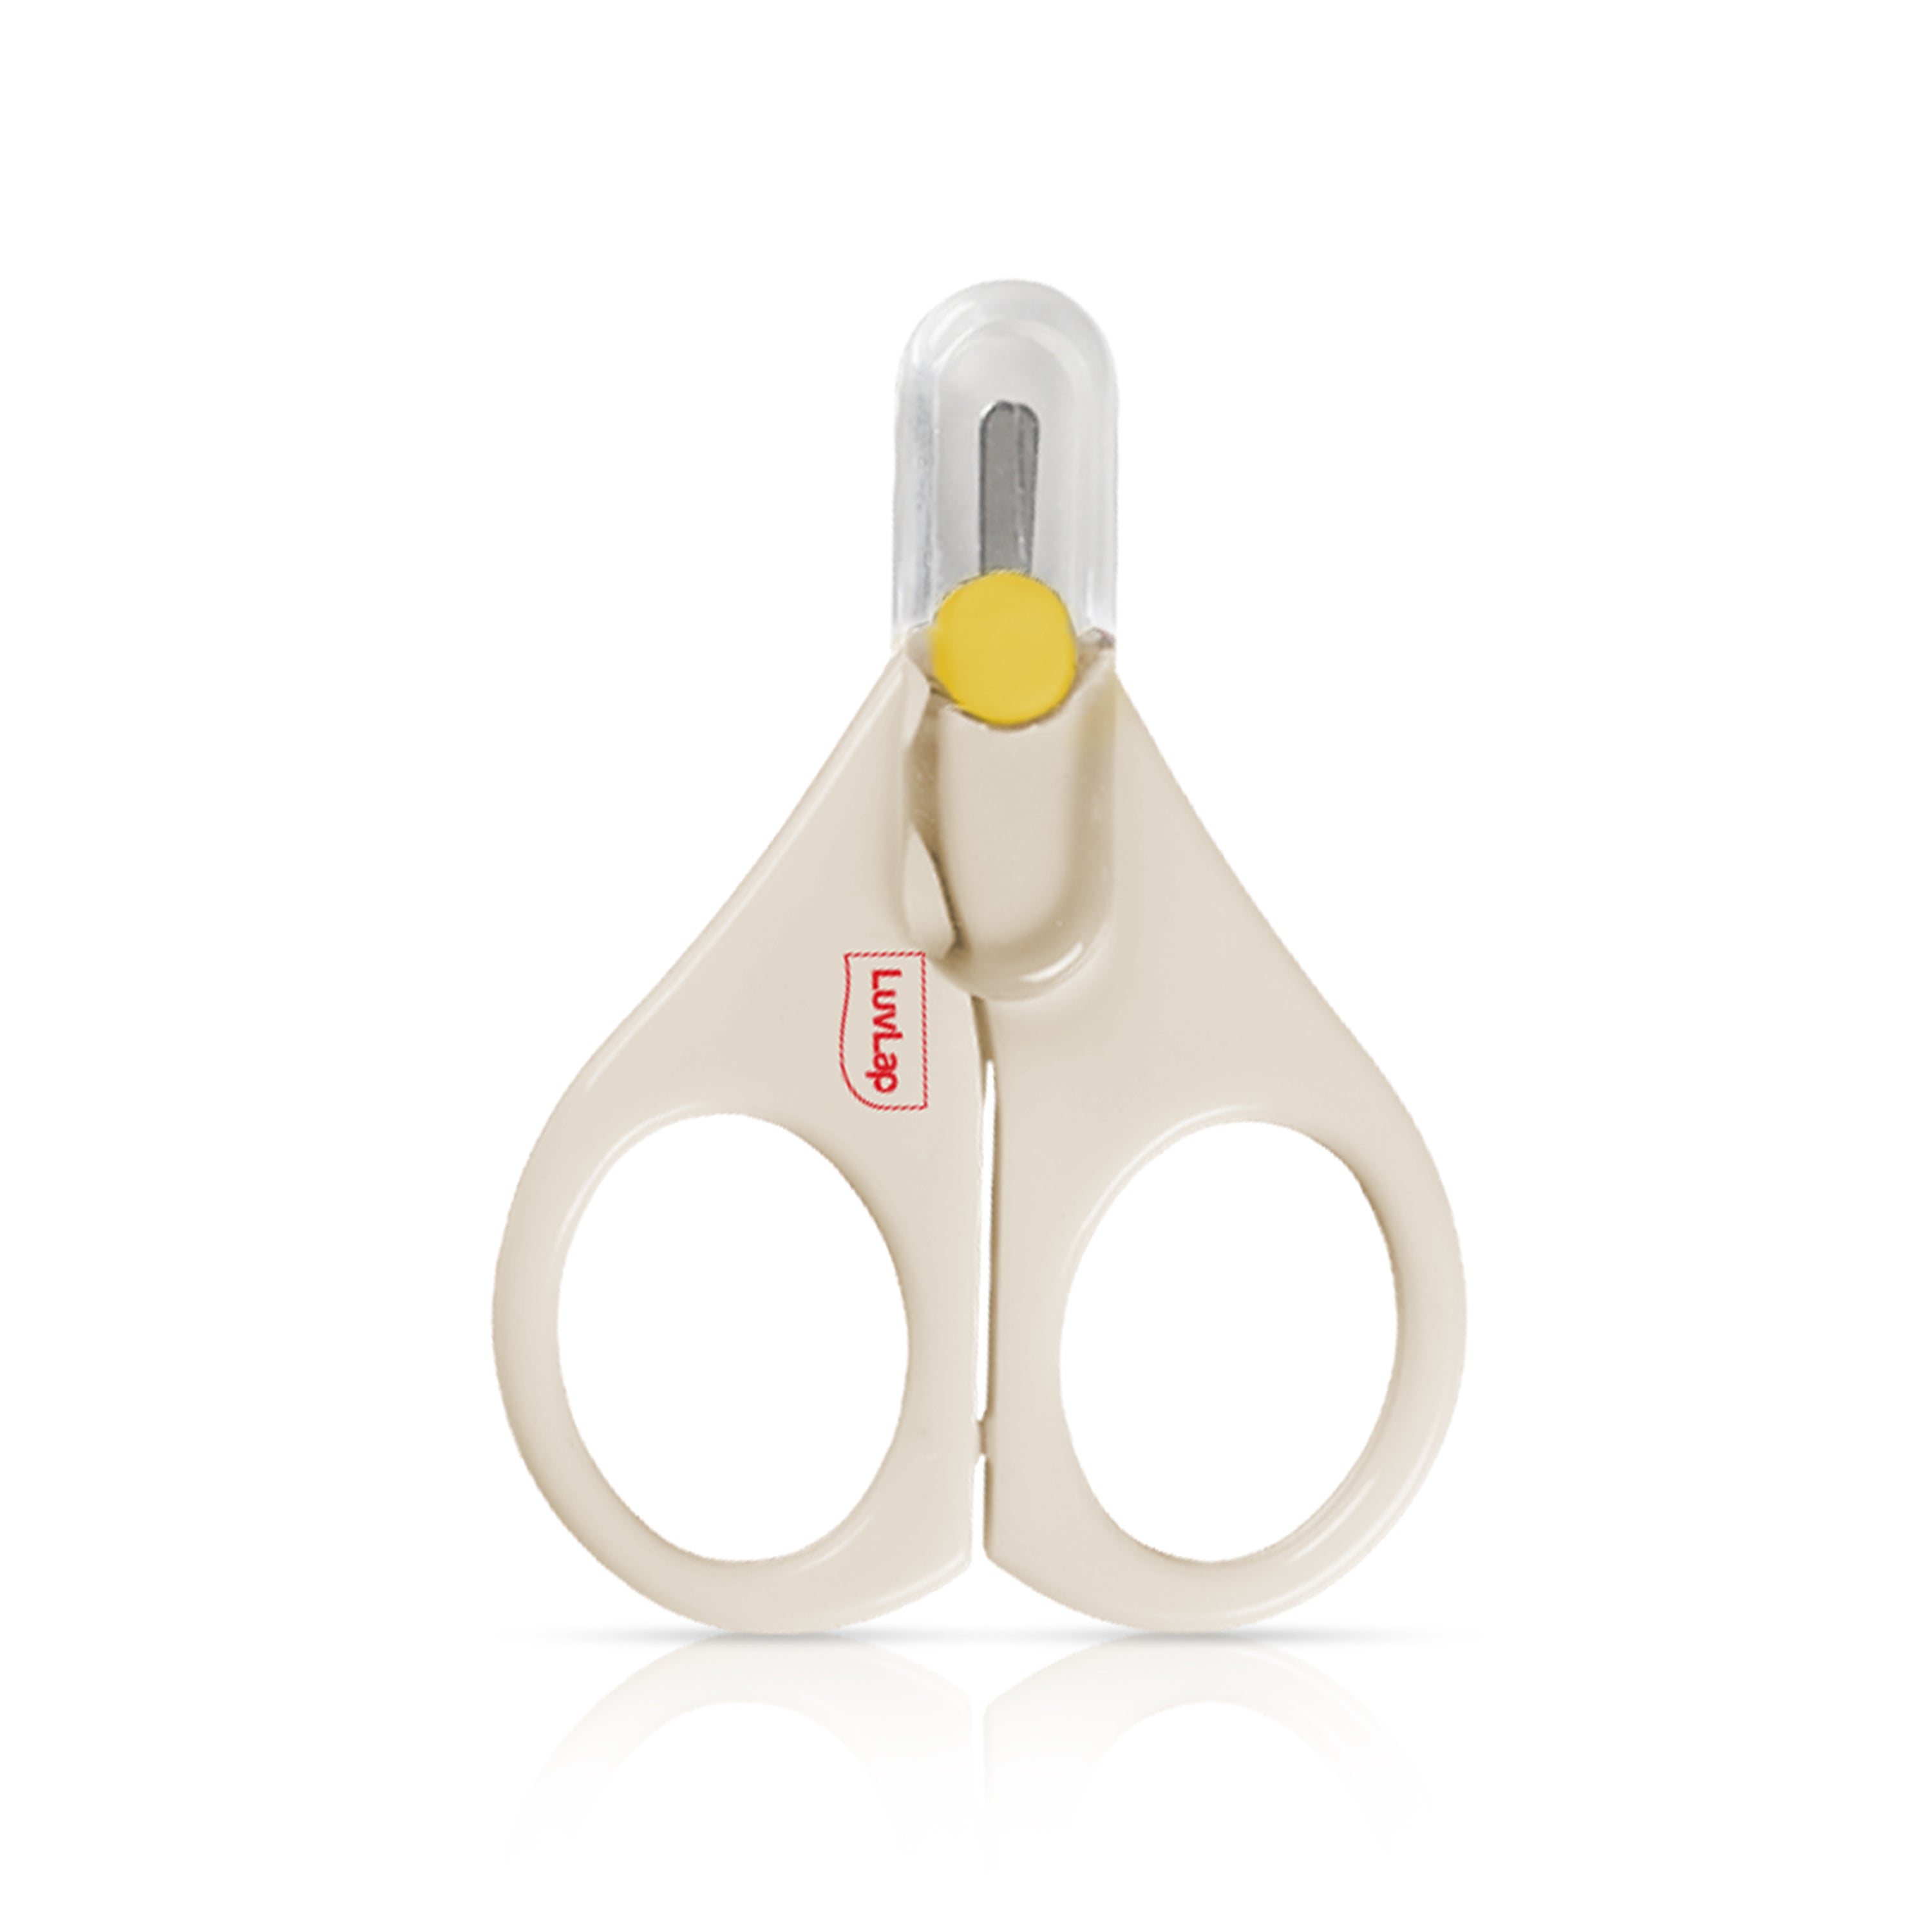 CHICCO Baby nail scissors, orange | eBay